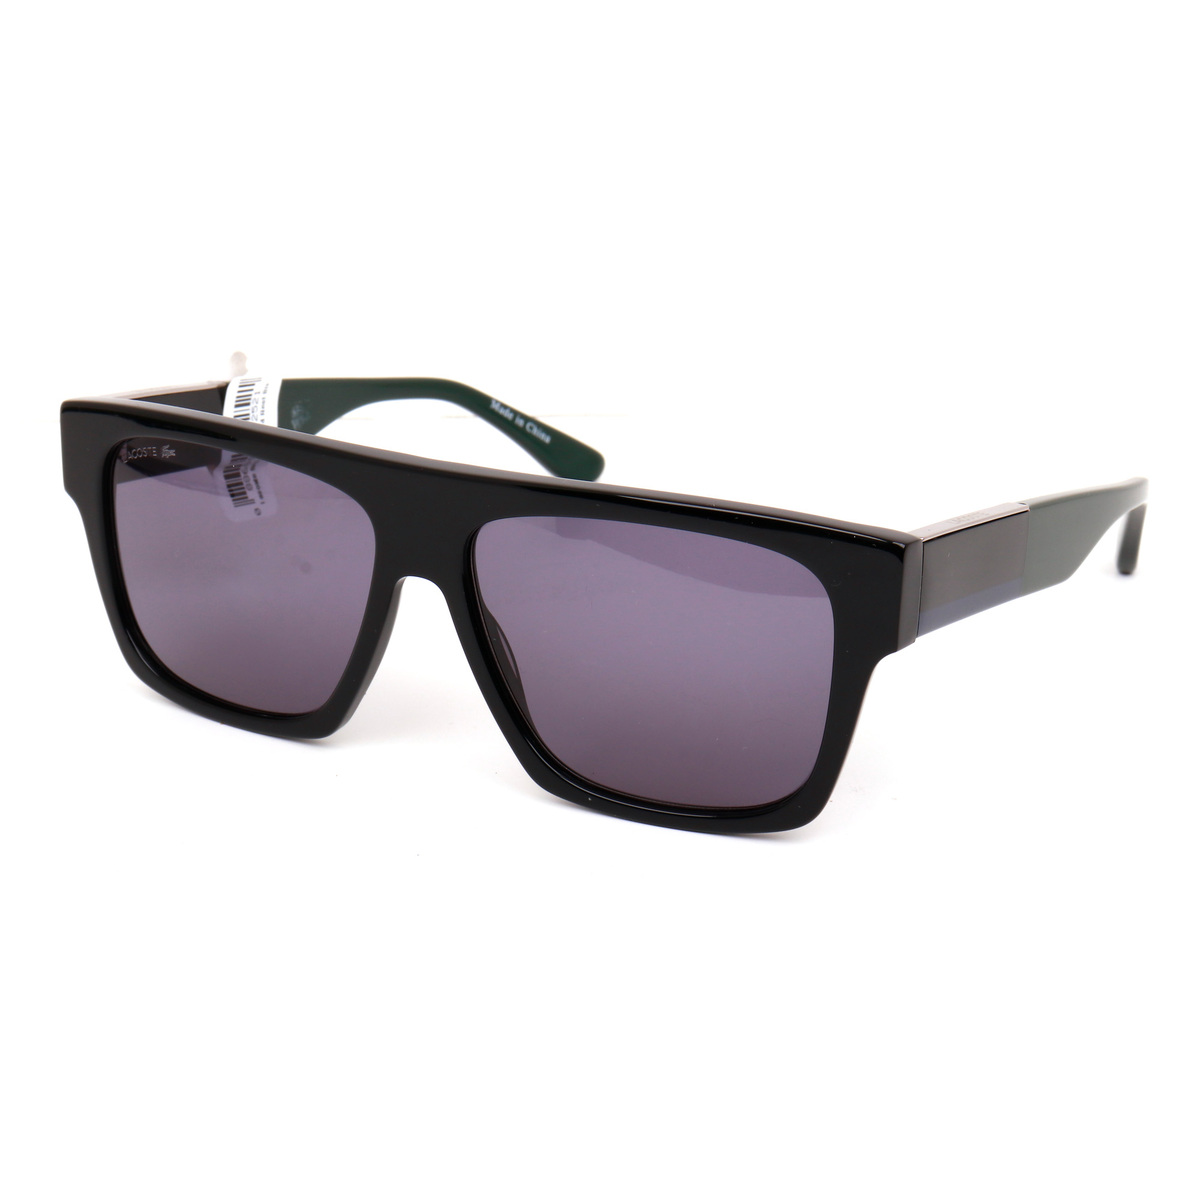 Lacoste Men's Rectangle Sunglasses, Grey, 984S5714